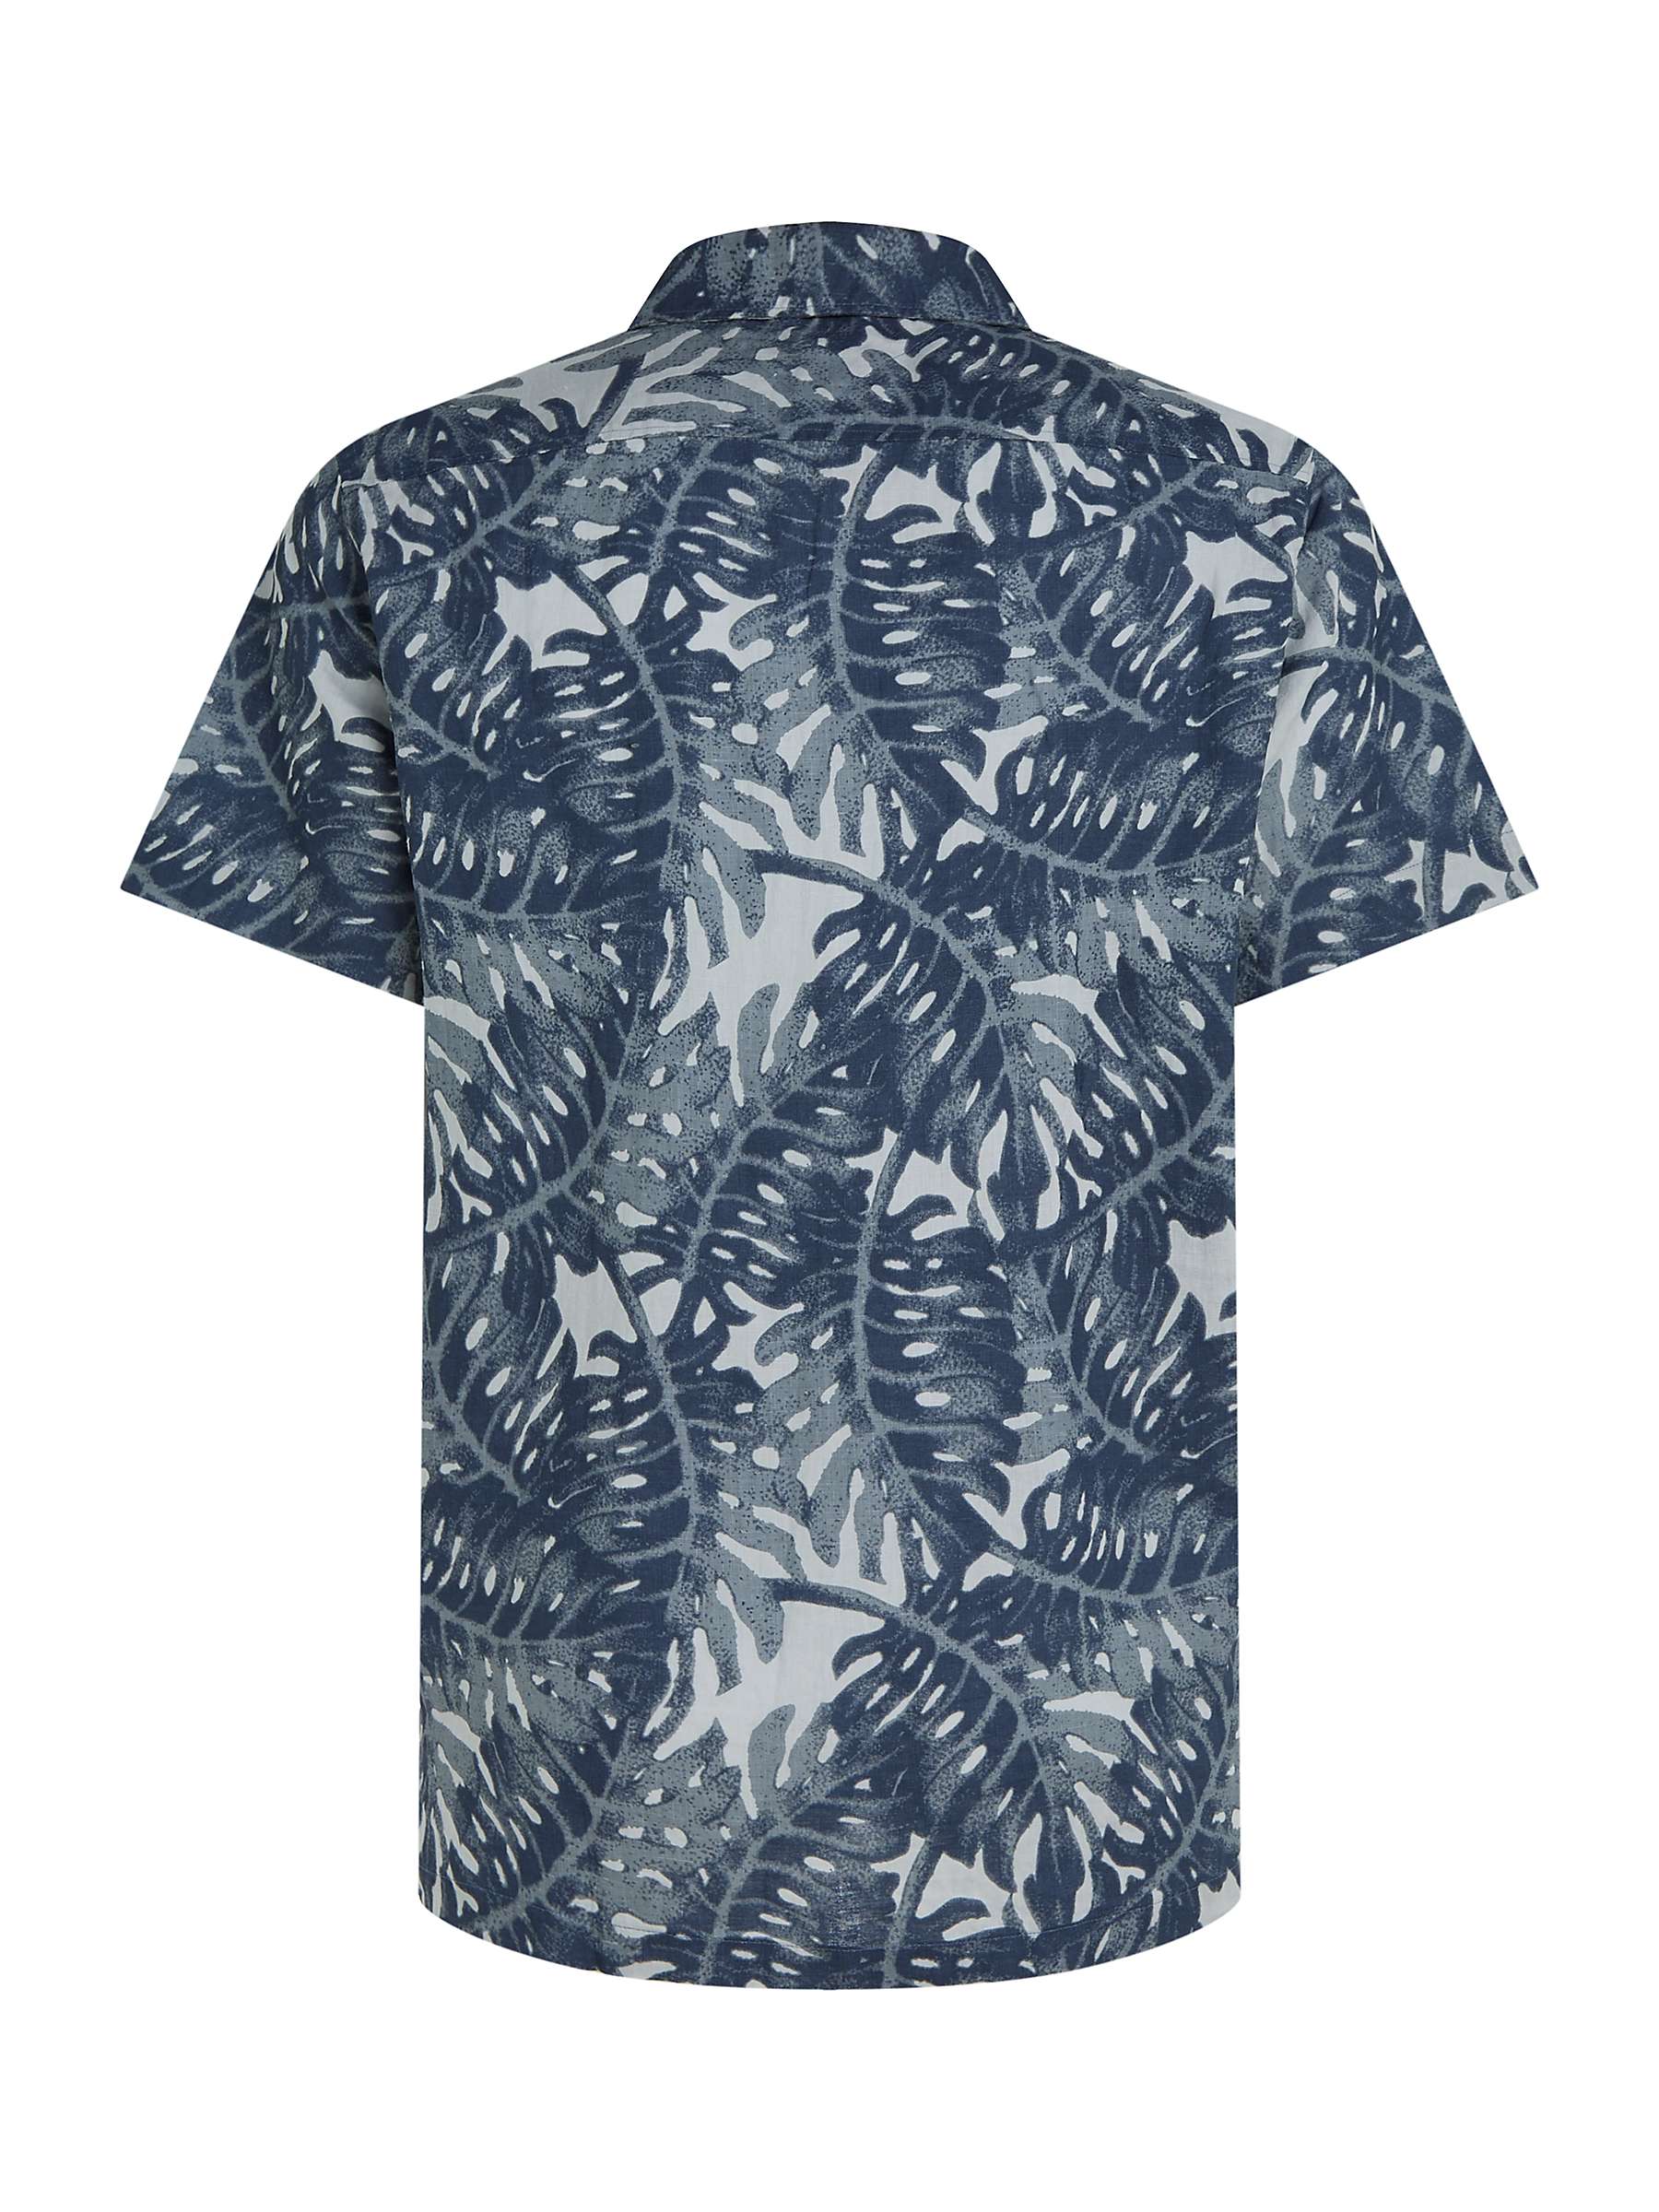 Buy Tommy Hilfiger Foliage Printed Linen Short Sleeve Shirt, Basic Navy/Multi Online at johnlewis.com